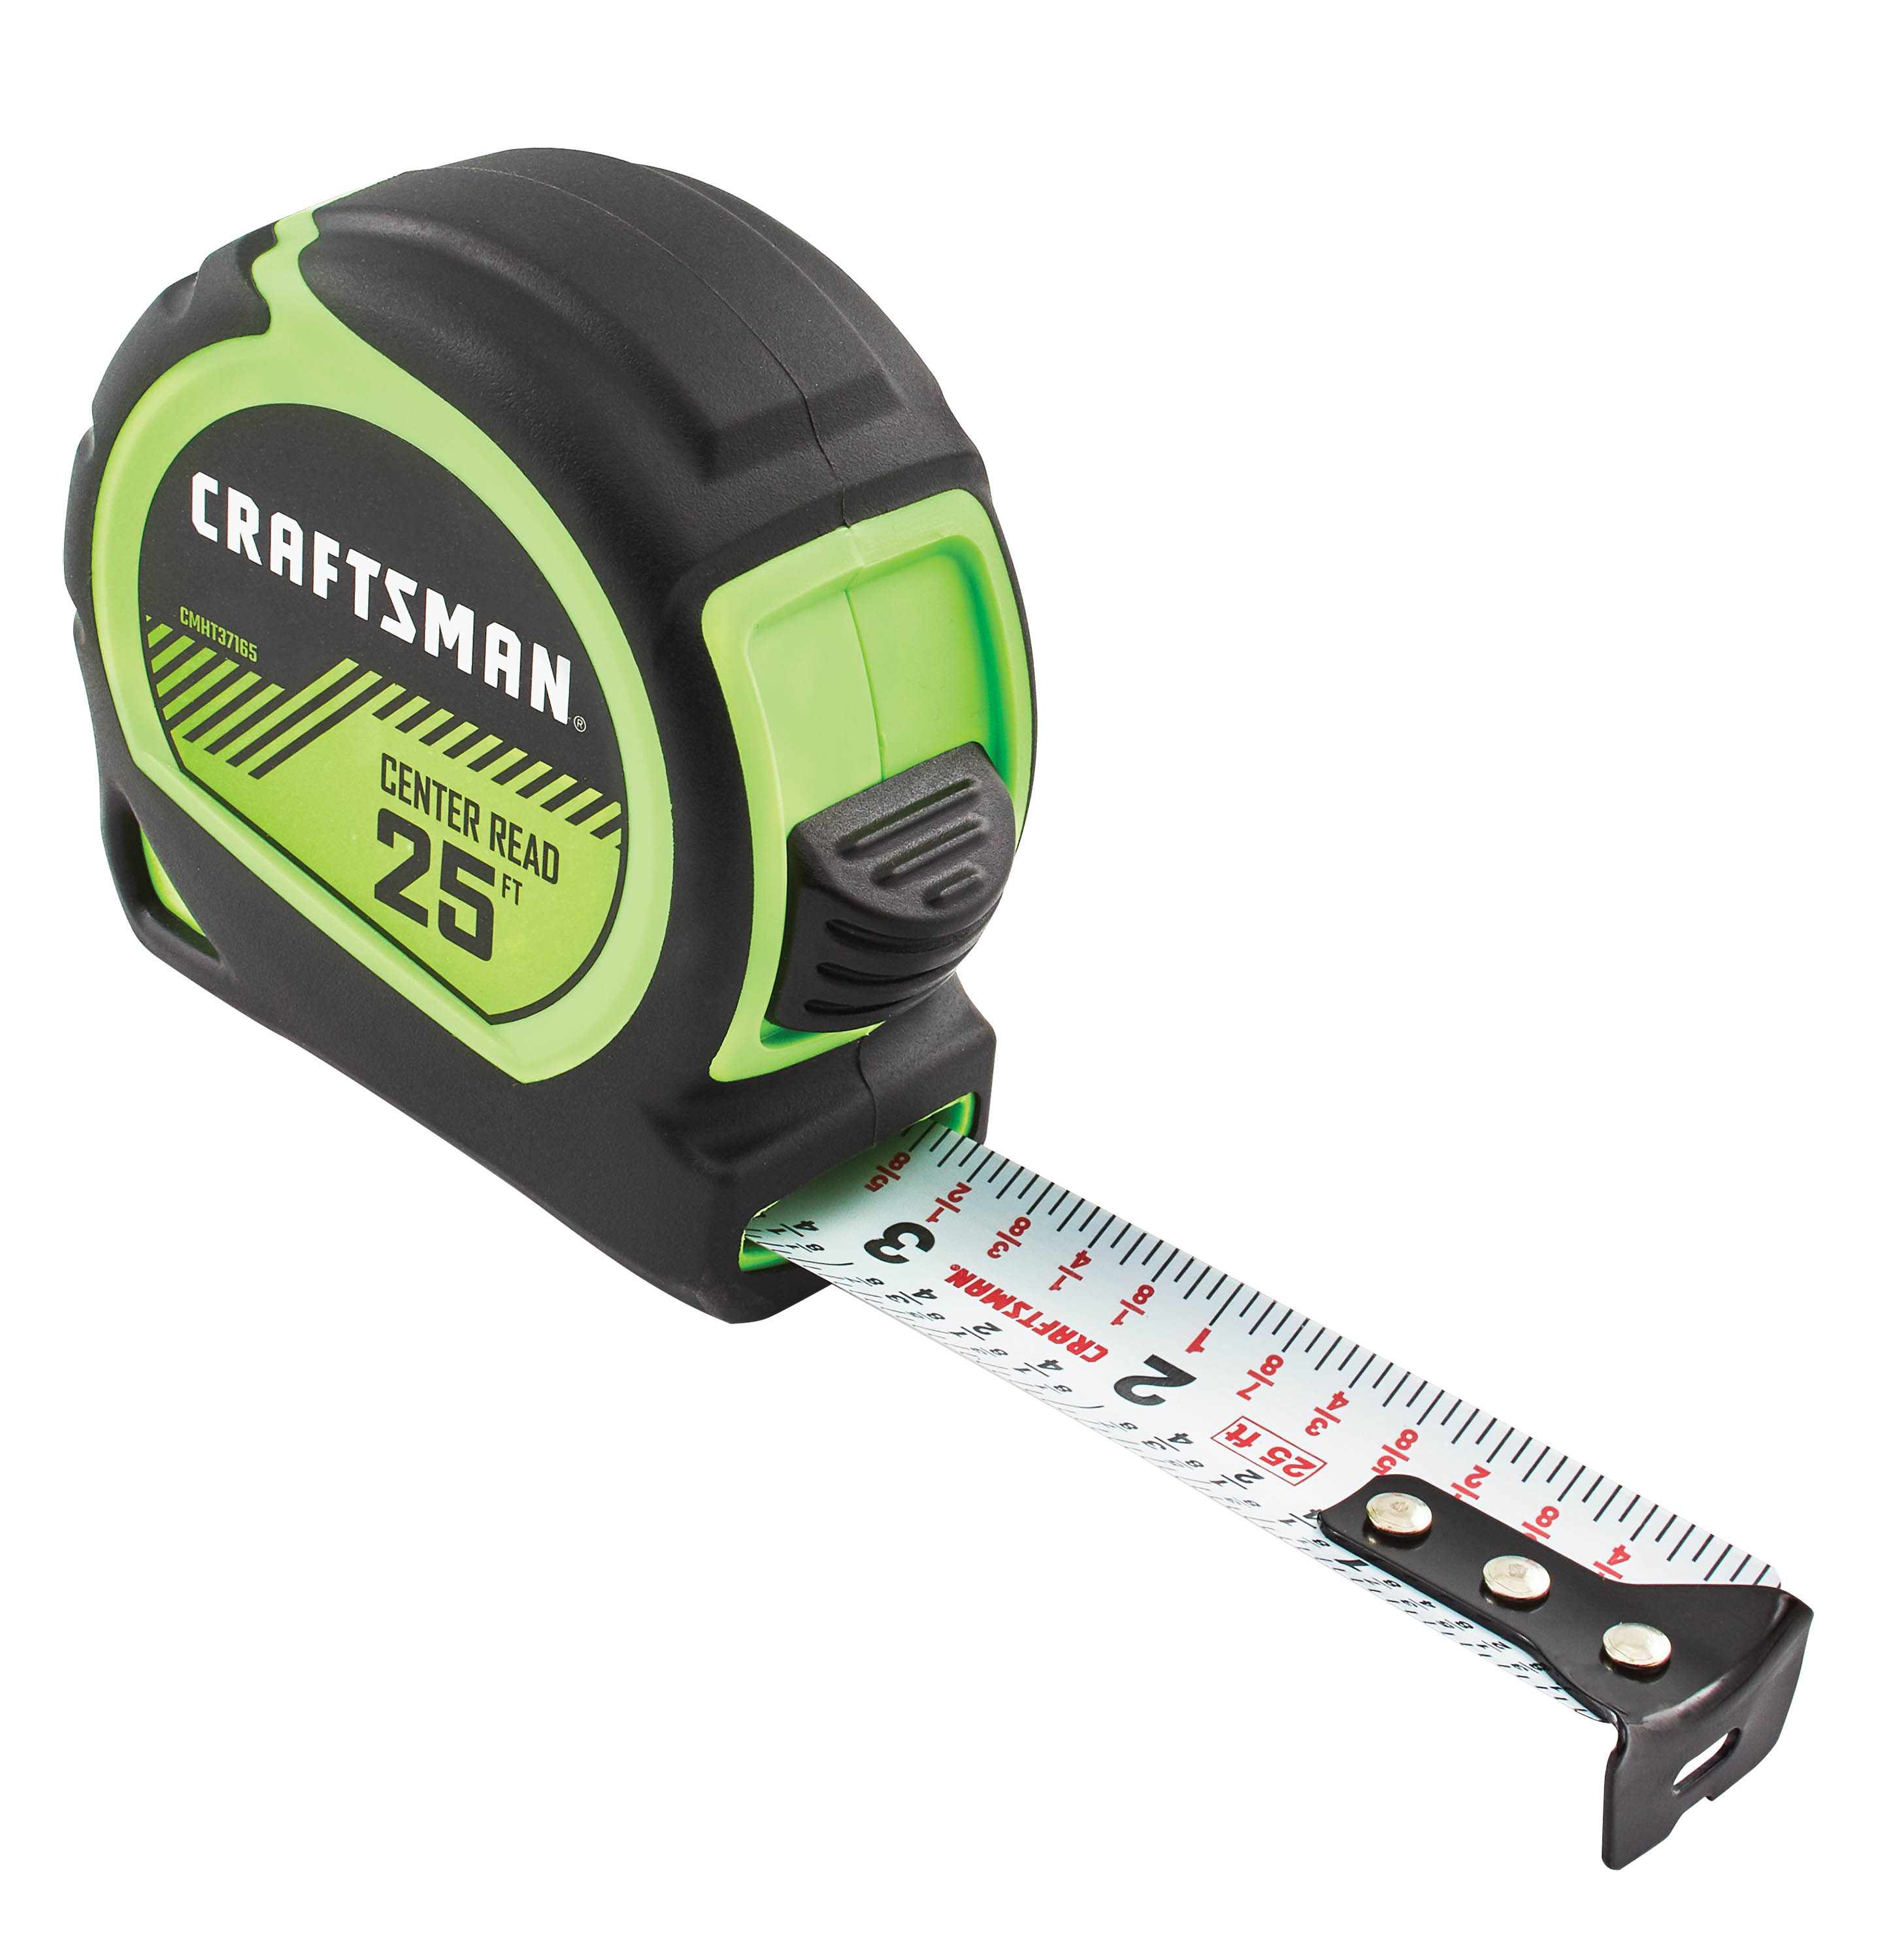 CRAFTSMAN HI-VIS 25-ft Tape Measure in the Tape Measures